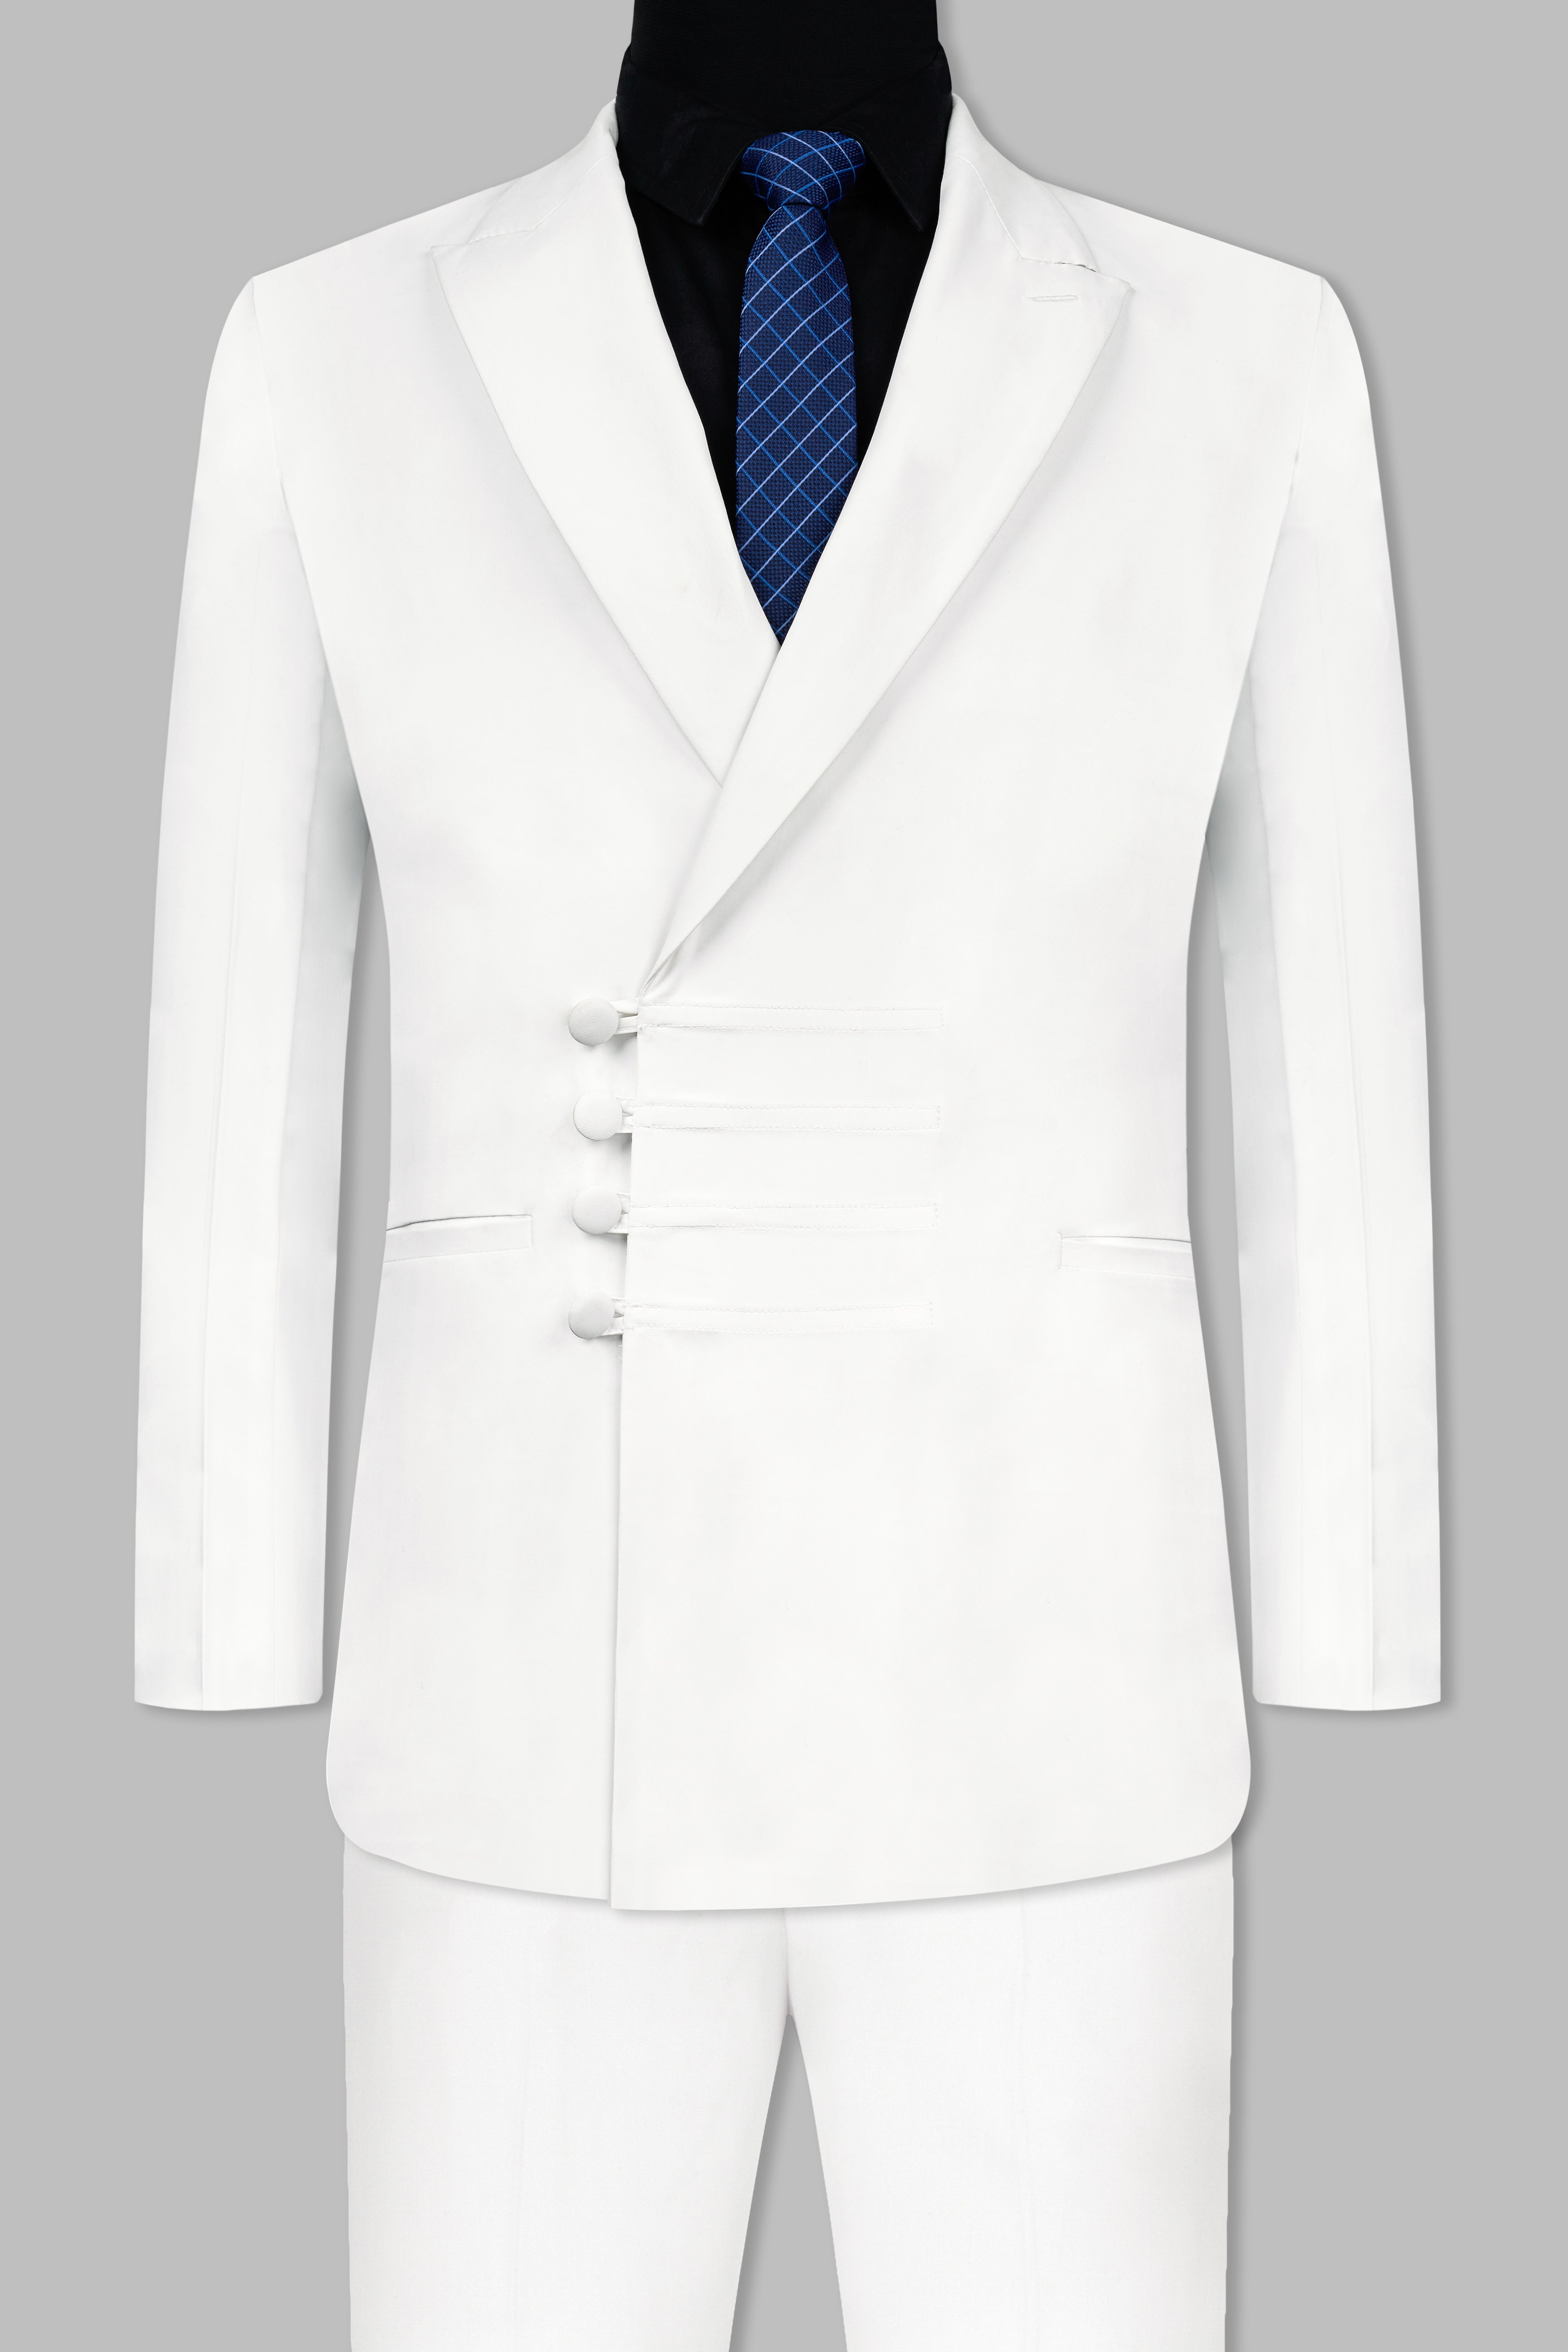 Bright White Wool Rich Designer Suit ST2798-SBP-FB-D272-36, ST2798-SBP-FB-D272-38, ST2798-SBP-FB-D272-40, ST2798-SBP-FB-D272-42, ST2798-SBP-FB-D272-44, ST2798-SBP-FB-D272-46, ST2798-SBP-FB-D272-48, ST2798-SBP-FB-D272-50, ST2798-SBP-FB-D272-52, ST2798-SBP-FB-D272-54, ST2798-SBP-FB-D272-56, ST2798-SBP-FB-D272-58, ST2798-SBP-FB-D272-60